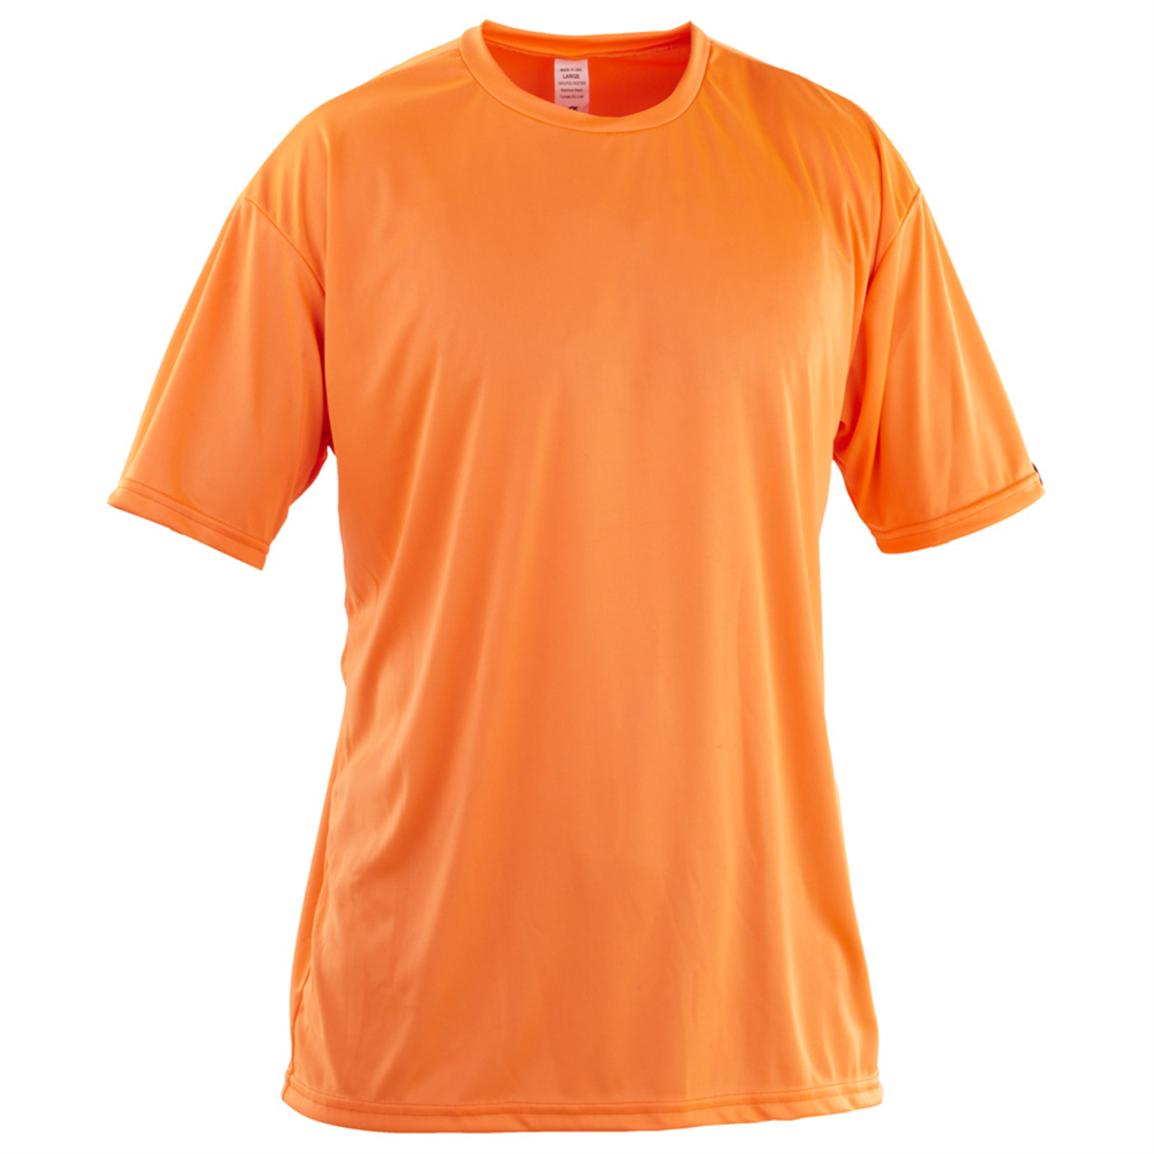 Men's WSIÂ® Microtech Blaze Orange Loose Short-sleeved Shirt - 580929, T-Shirts at Sportsman's Guide